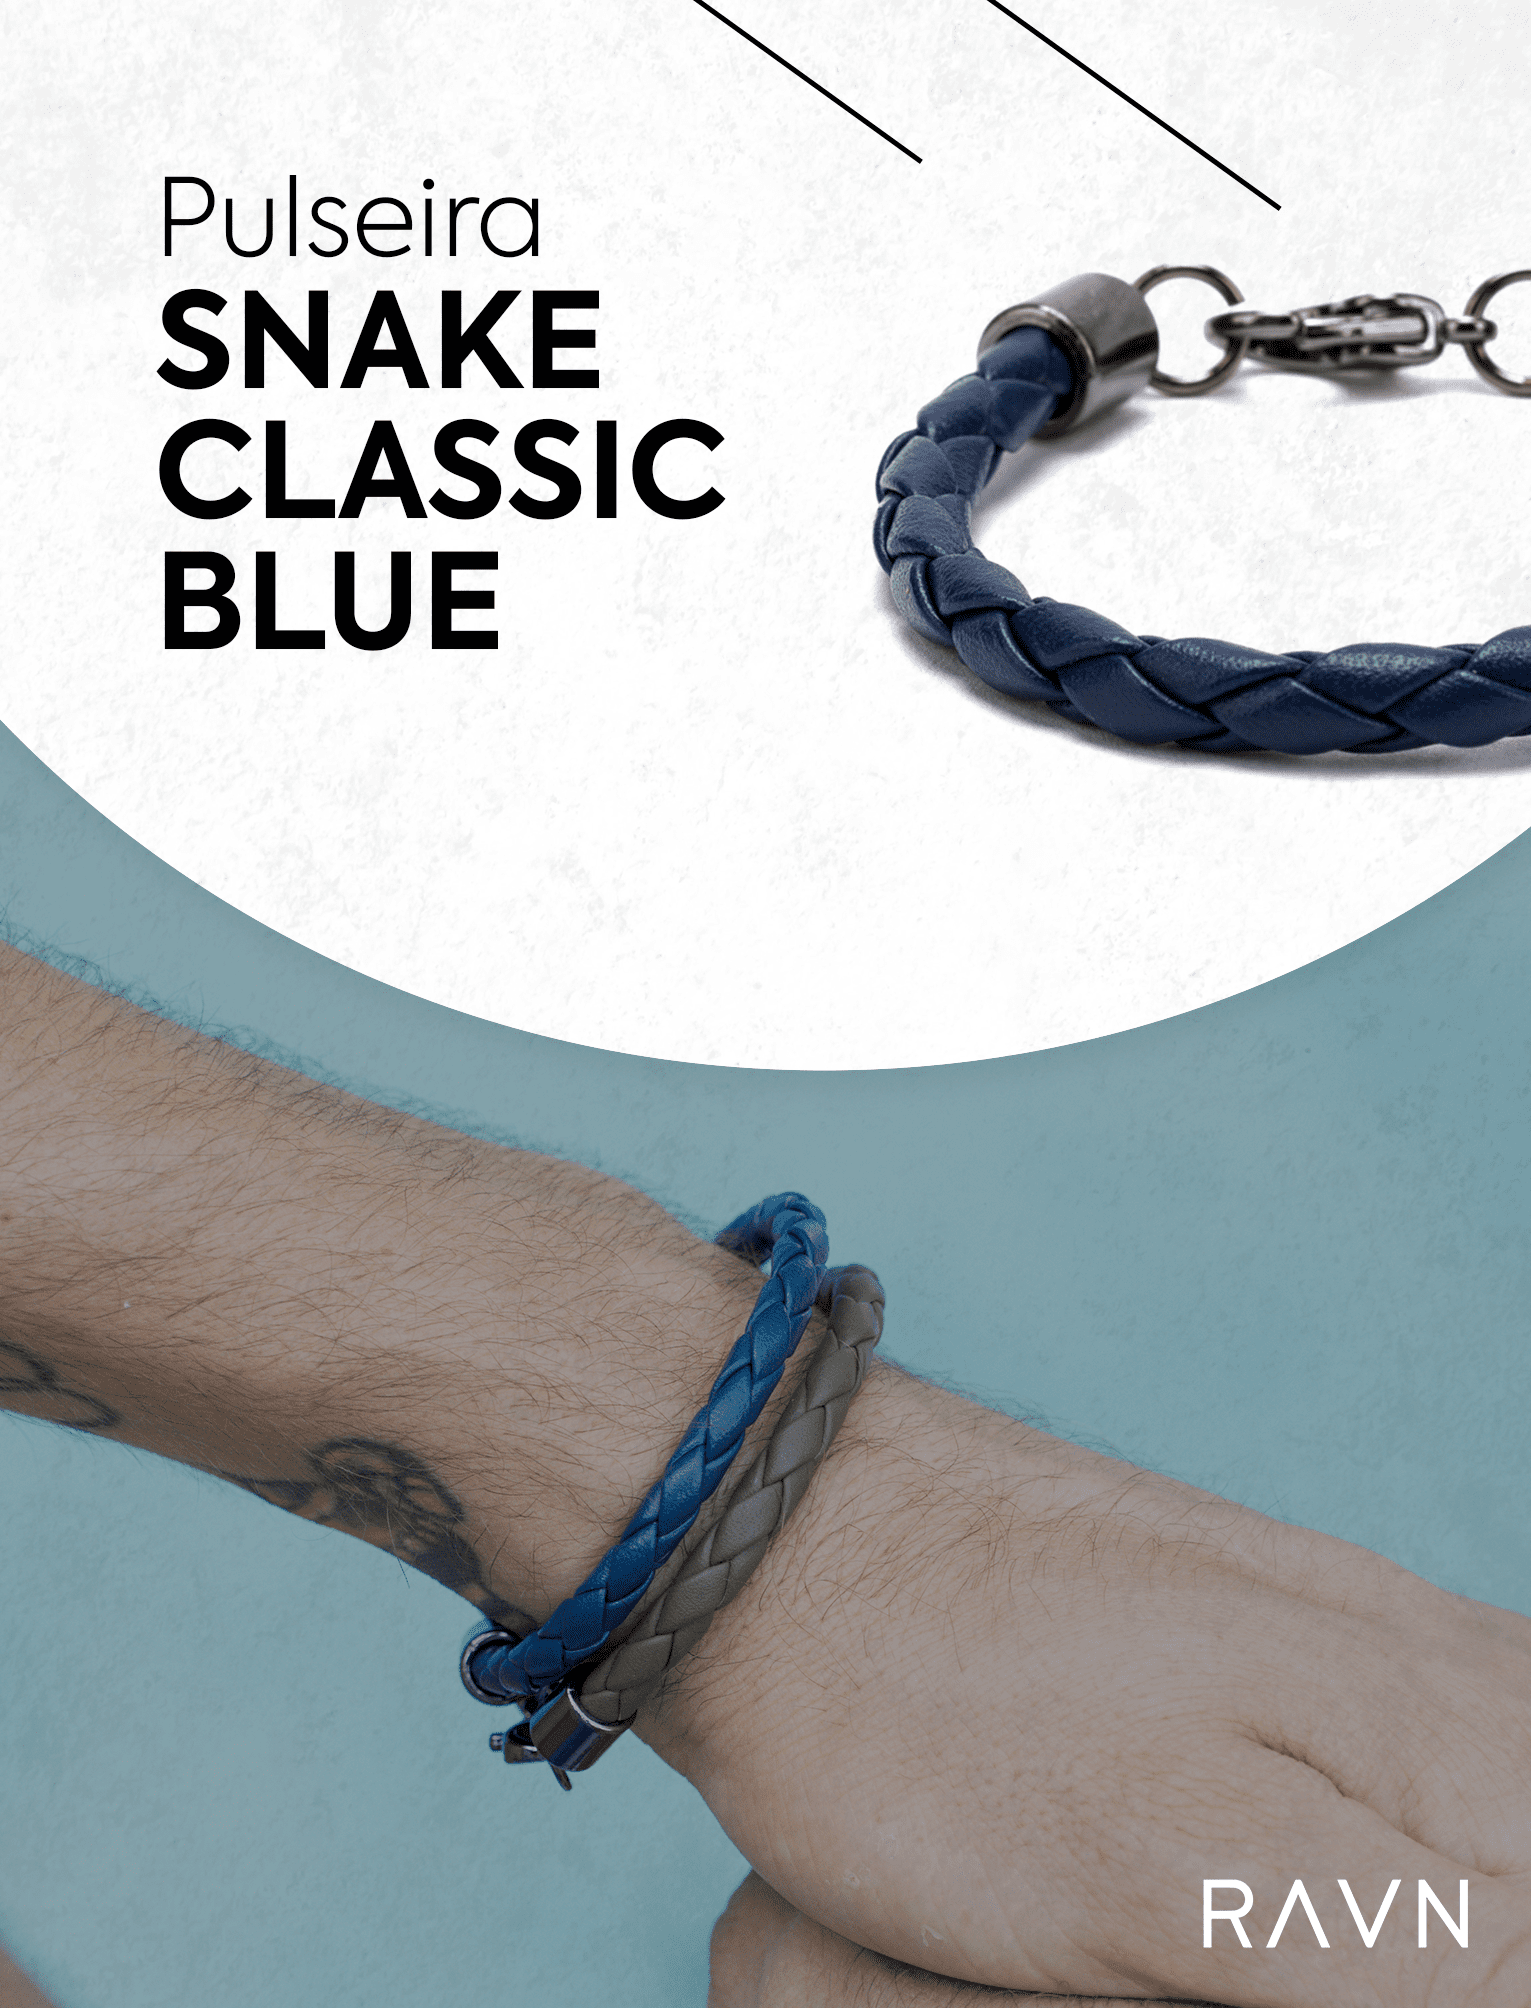 pulseira-snake-classic-banner-mobile